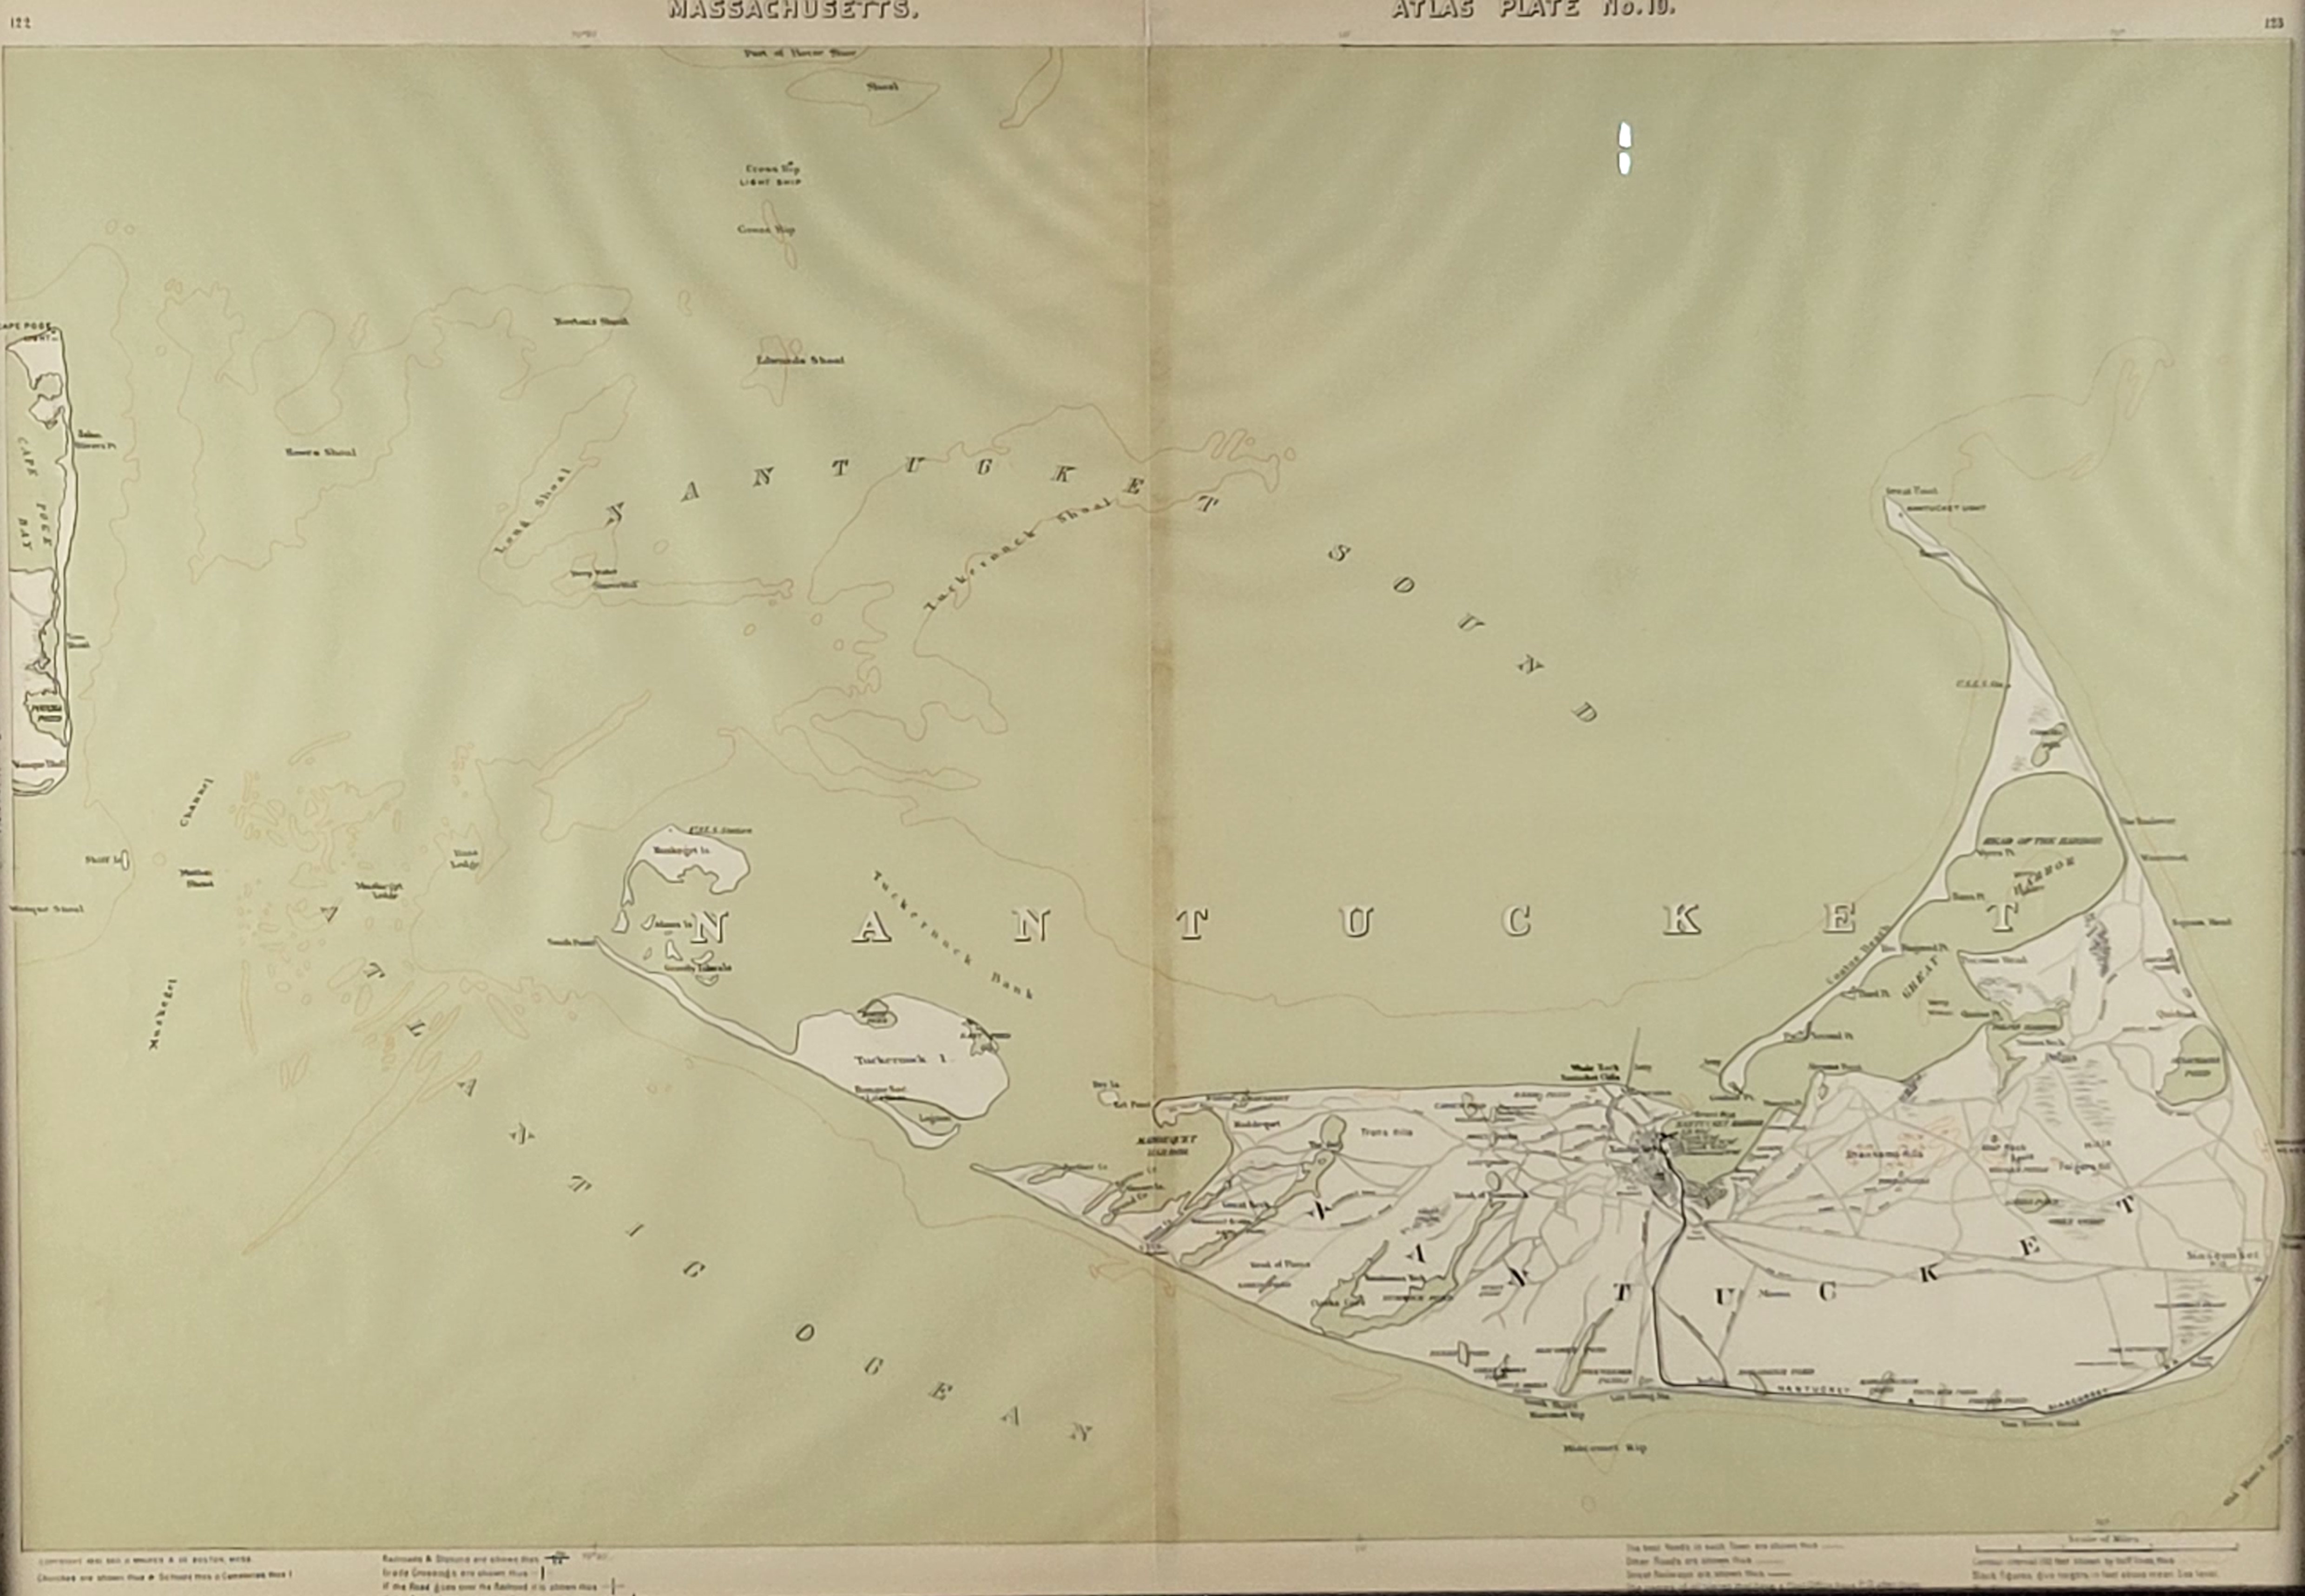 1891 George Walker Massachusetts Atlas Plate No. 10 Map of Nantucket